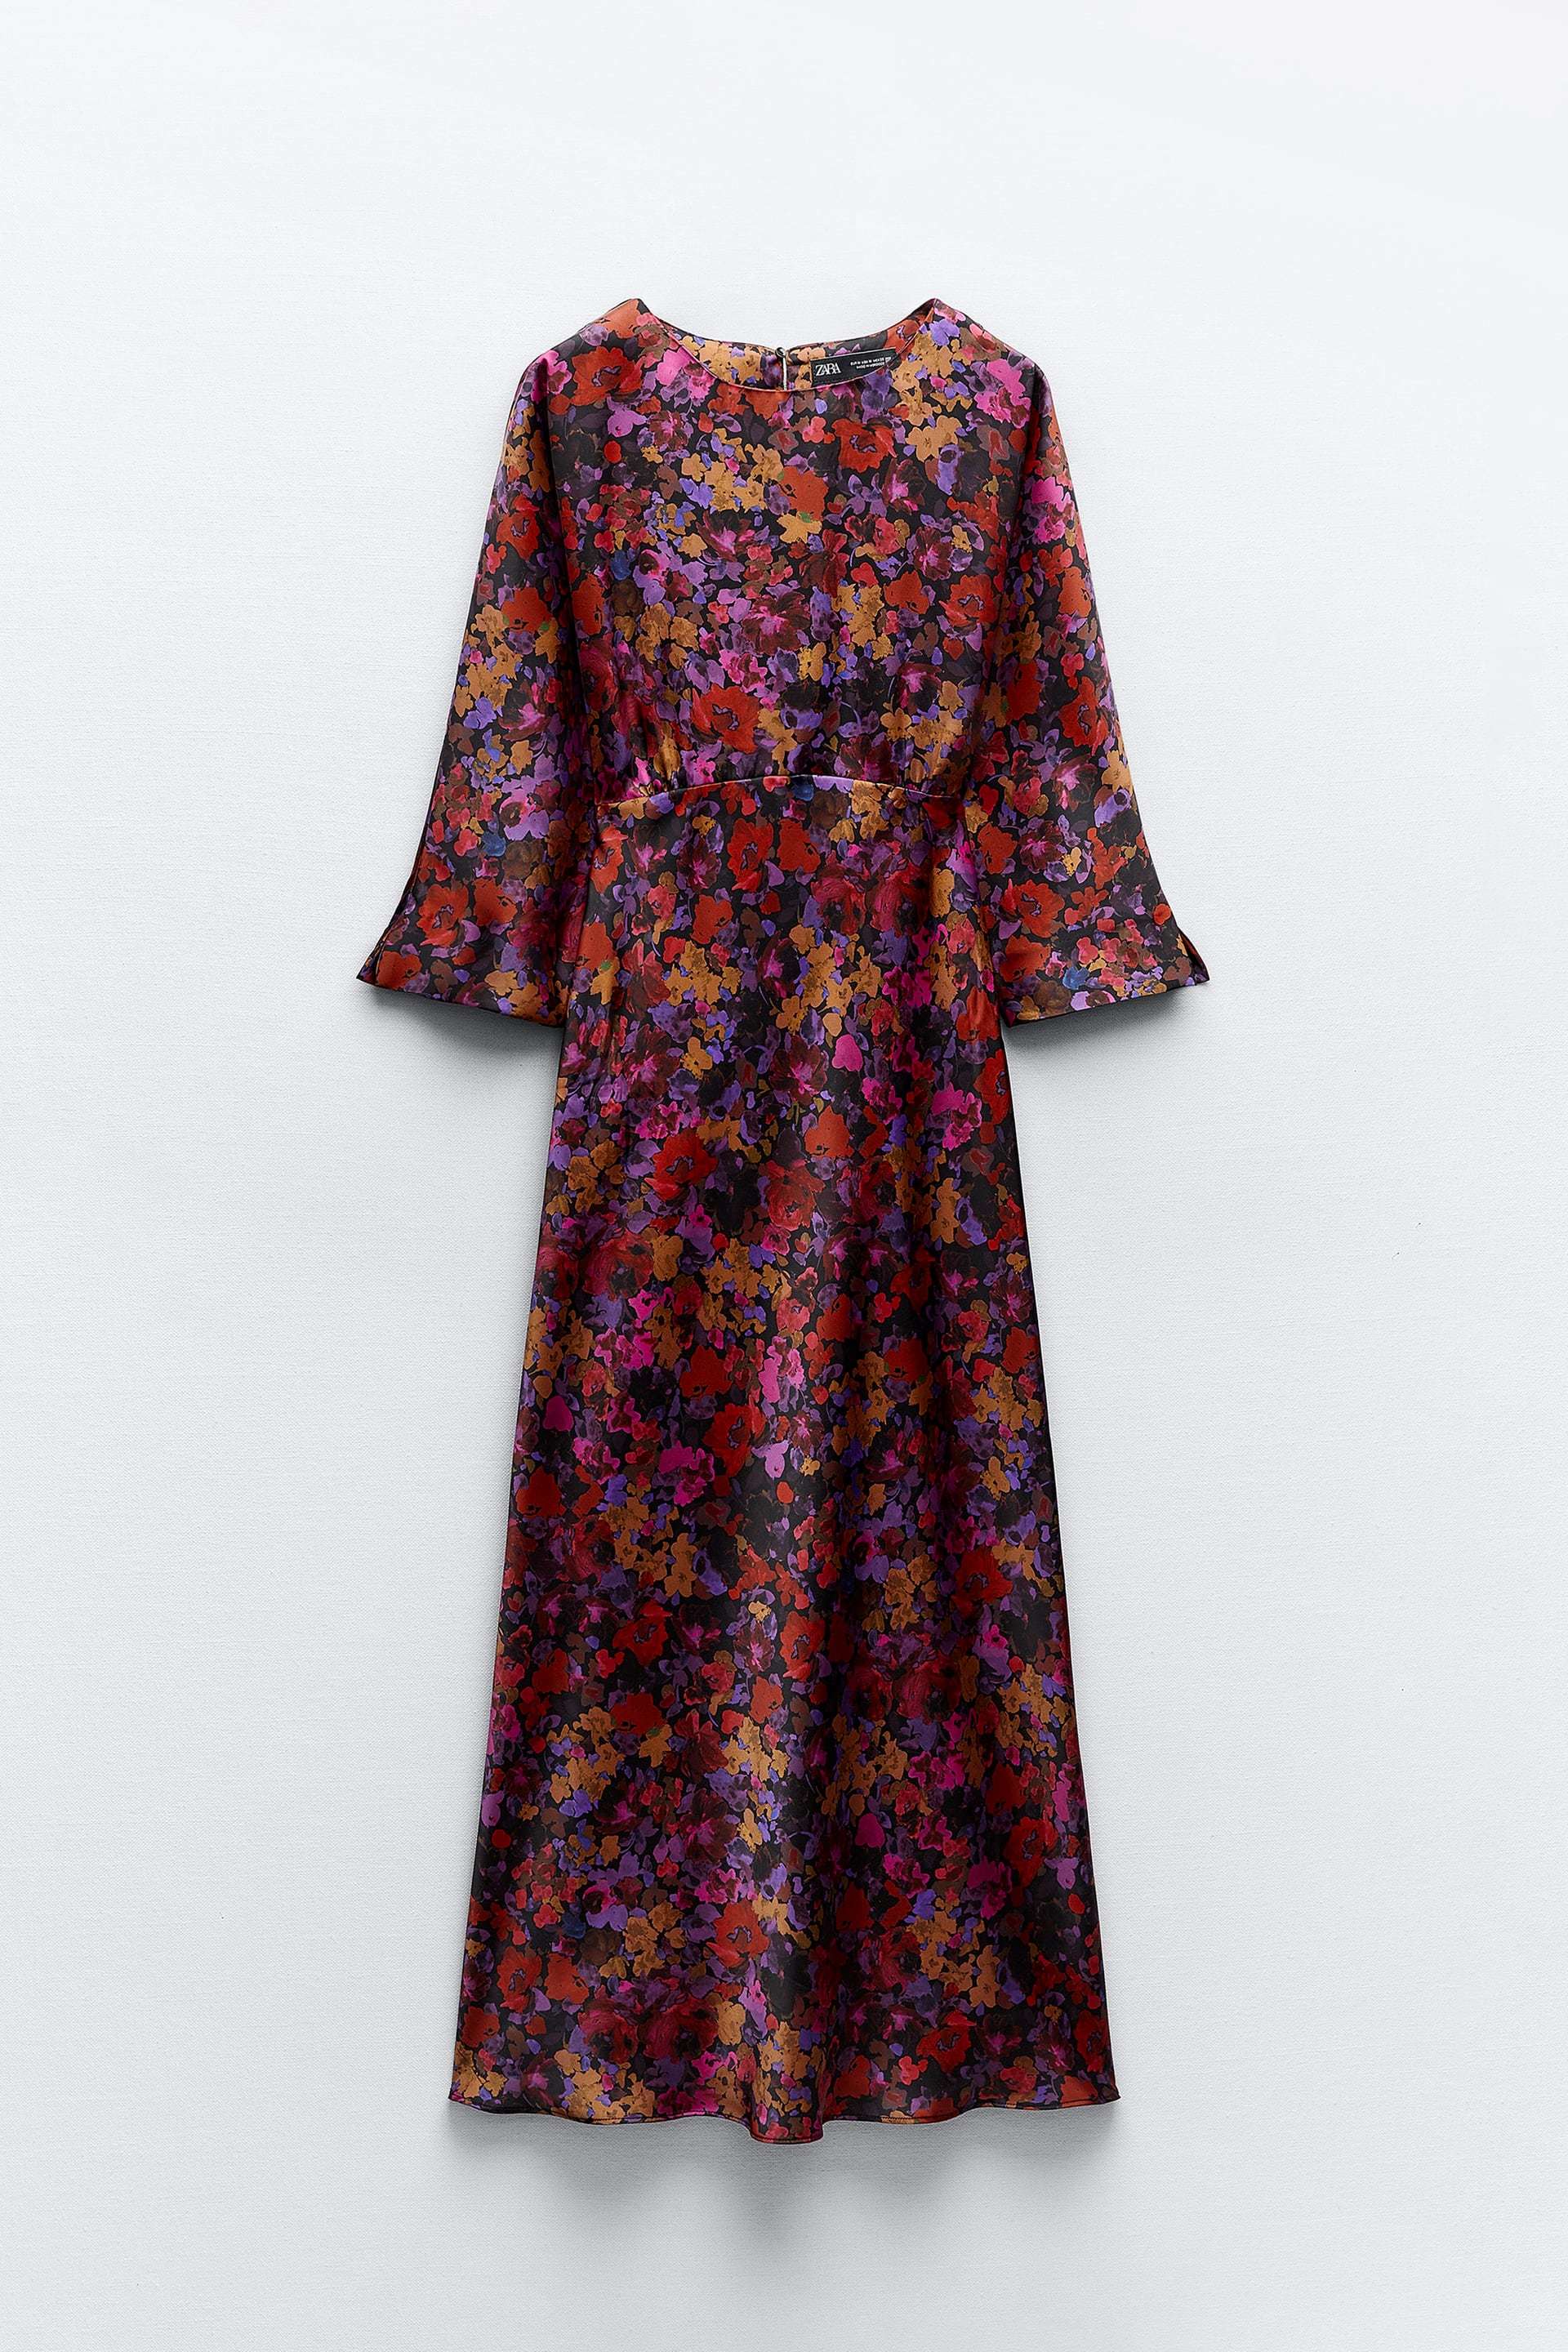 Vestido satinado de flores de Zara (39,95 euros).